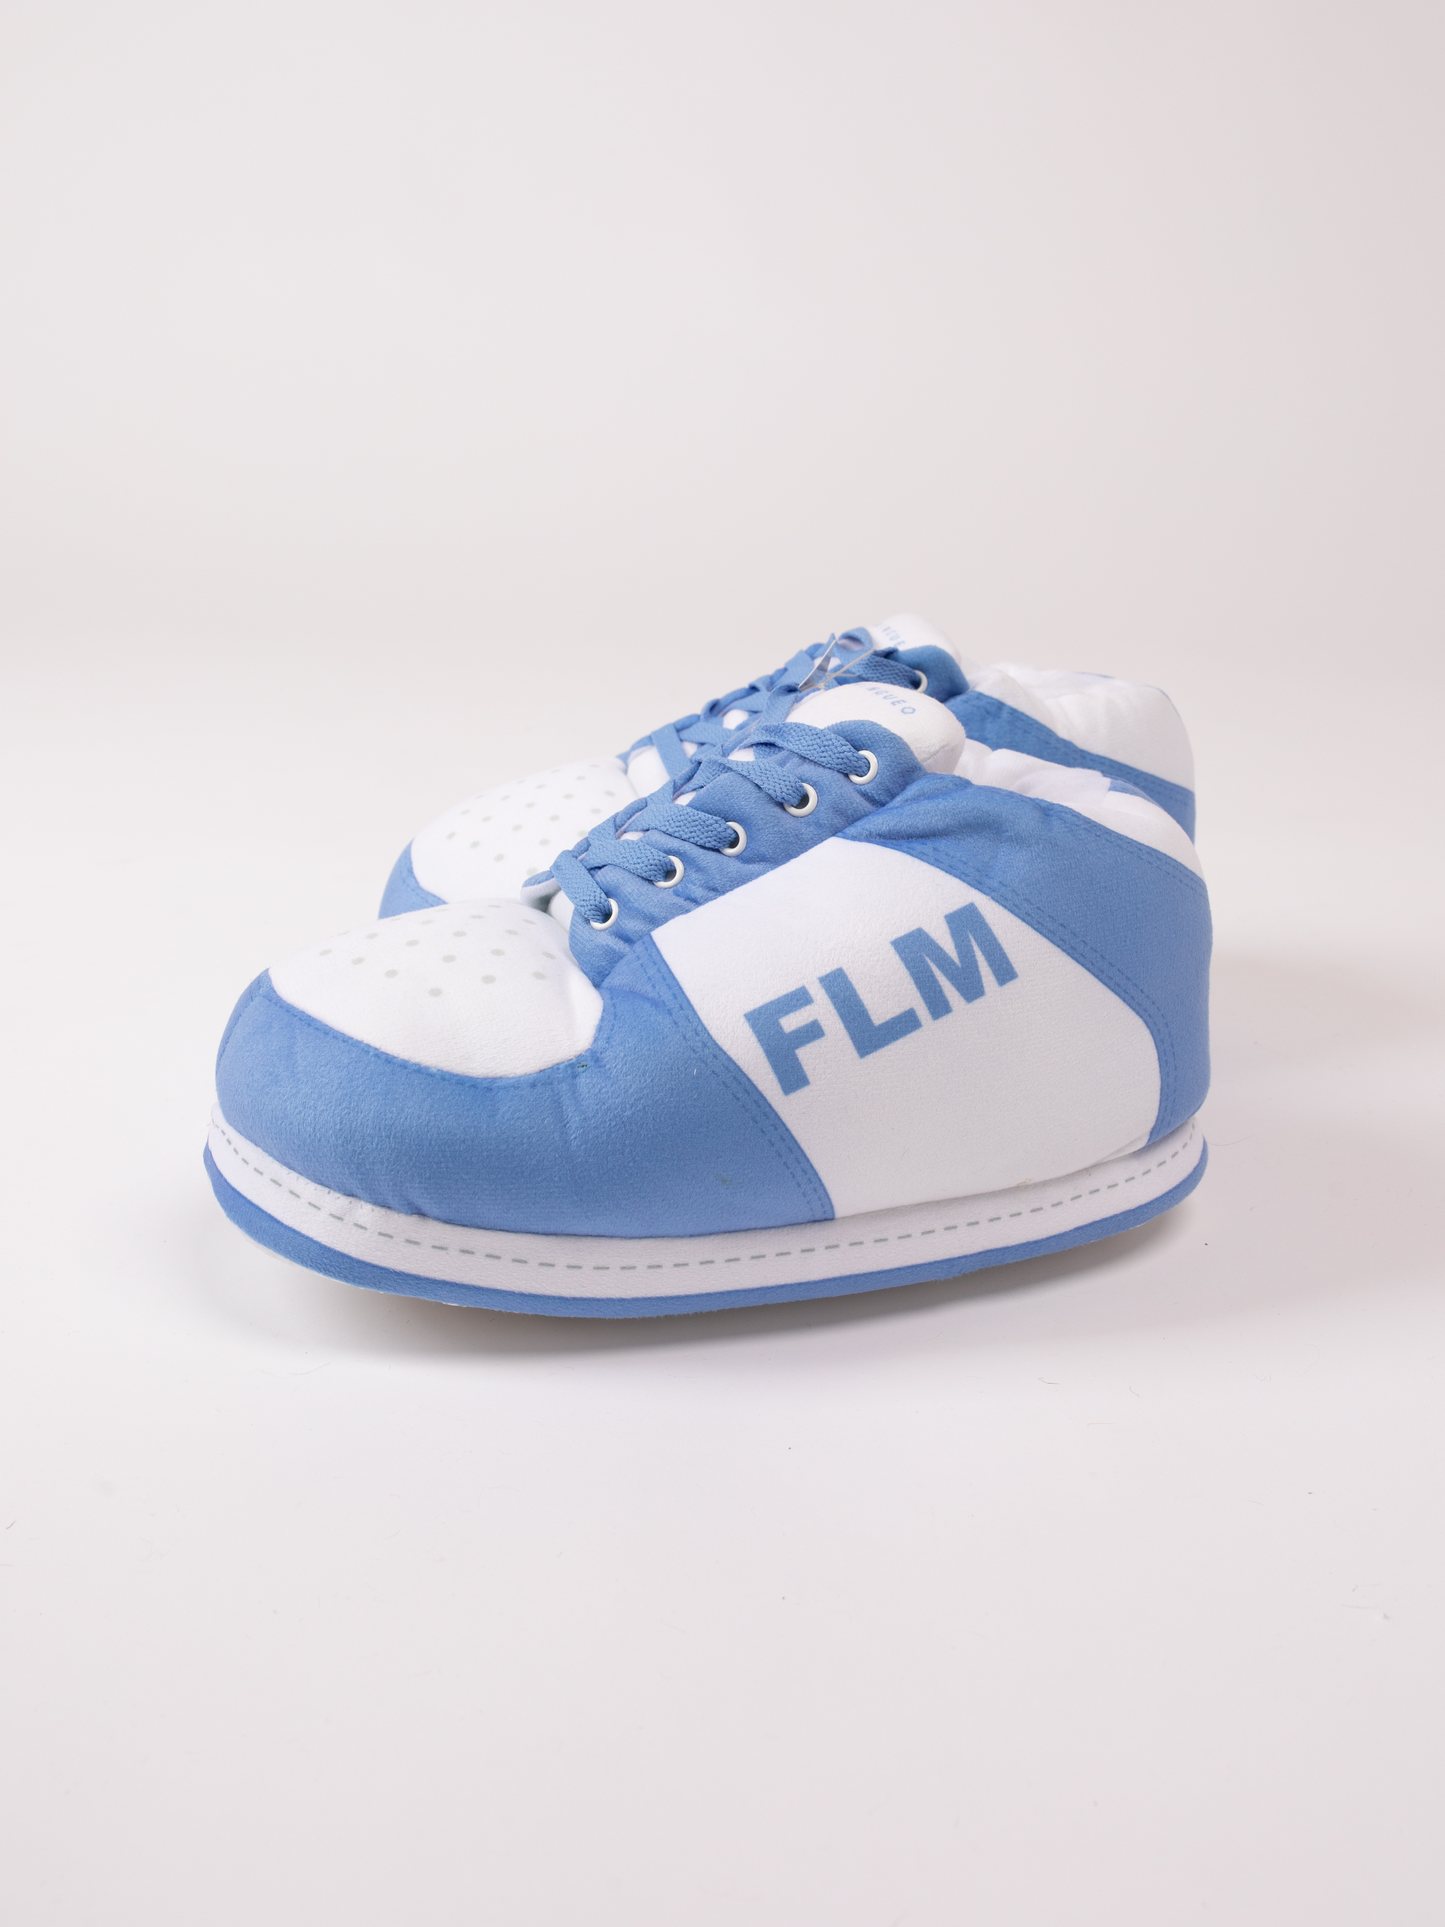 Giant Sneaker Slippers - Hawkis - Blue & White - Unisex - One Size